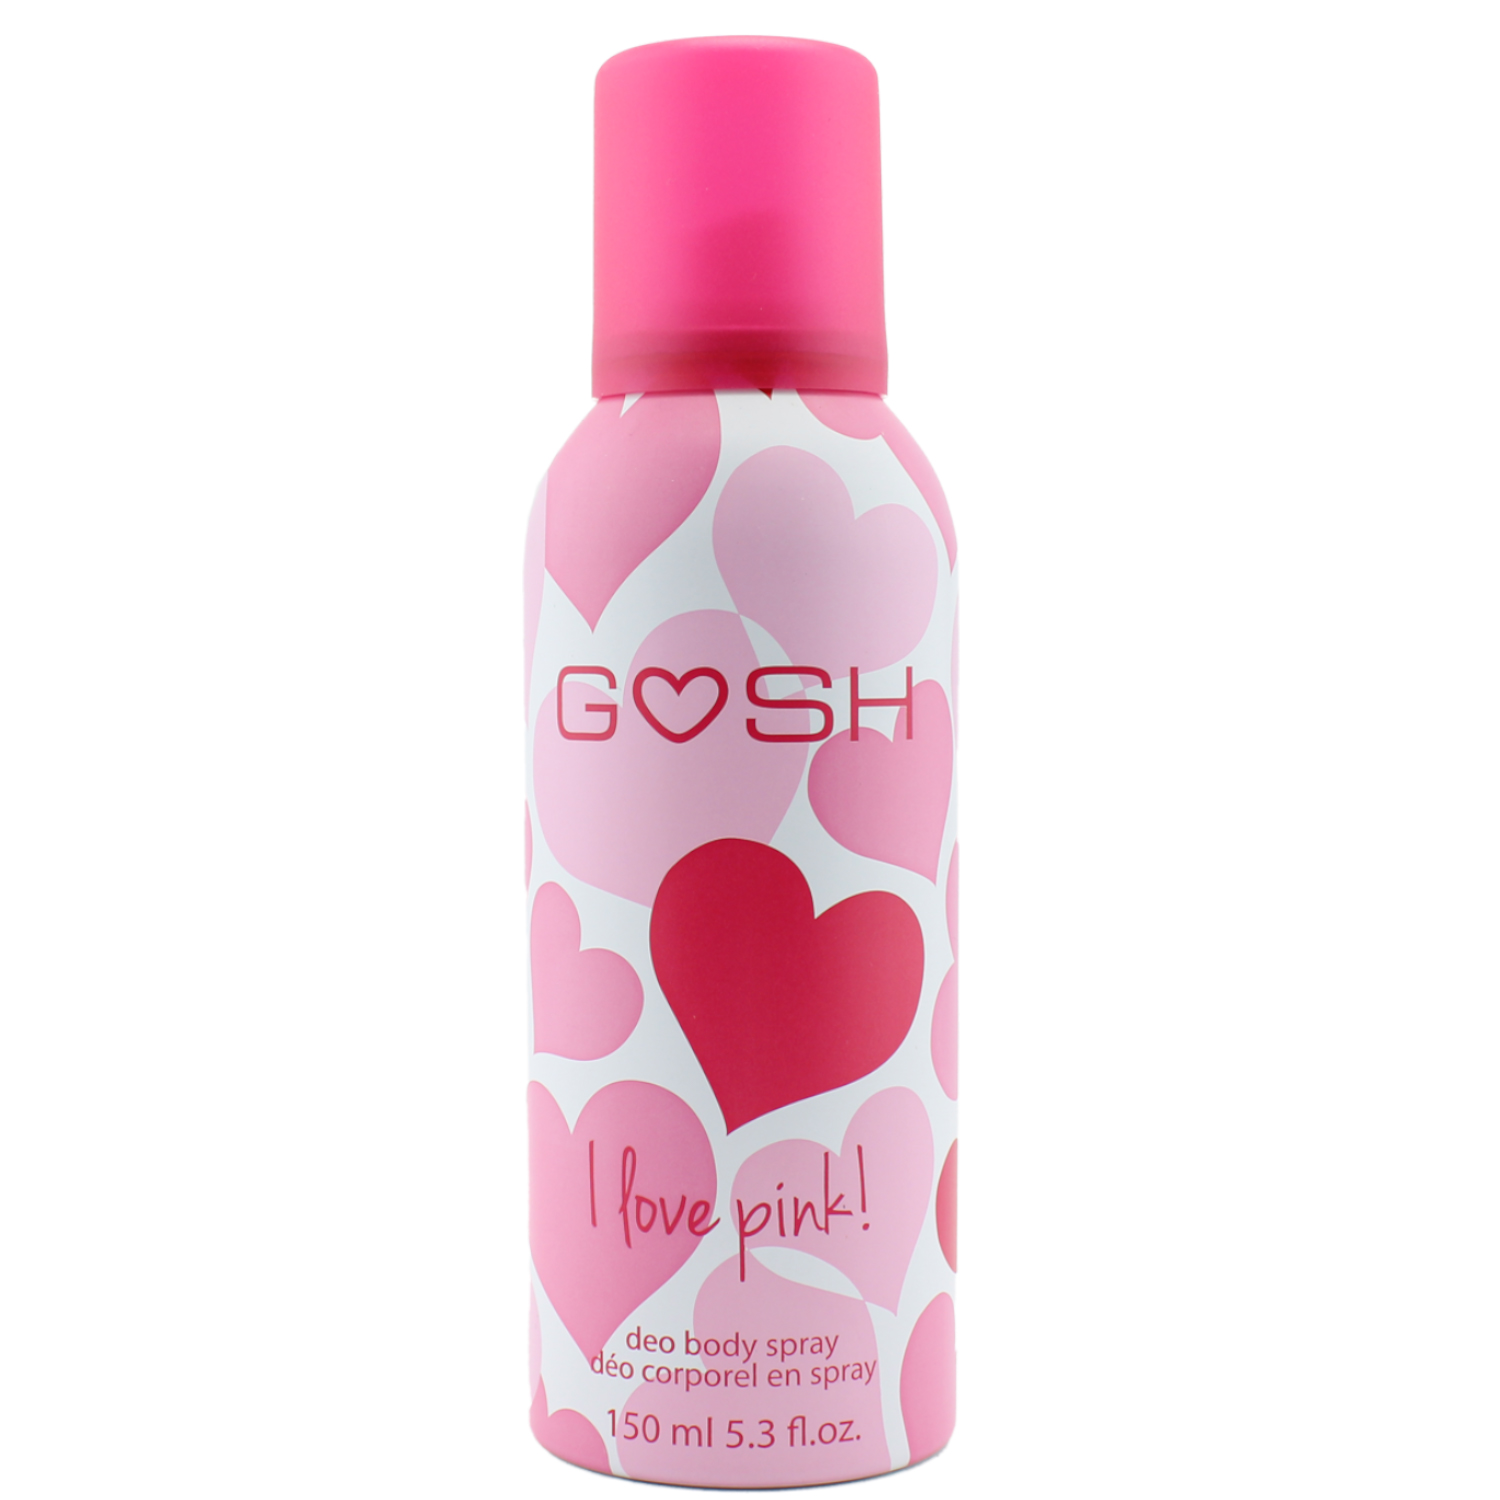 Gosh Copenhagen I Love Pink! Deodorant Spray 150ml